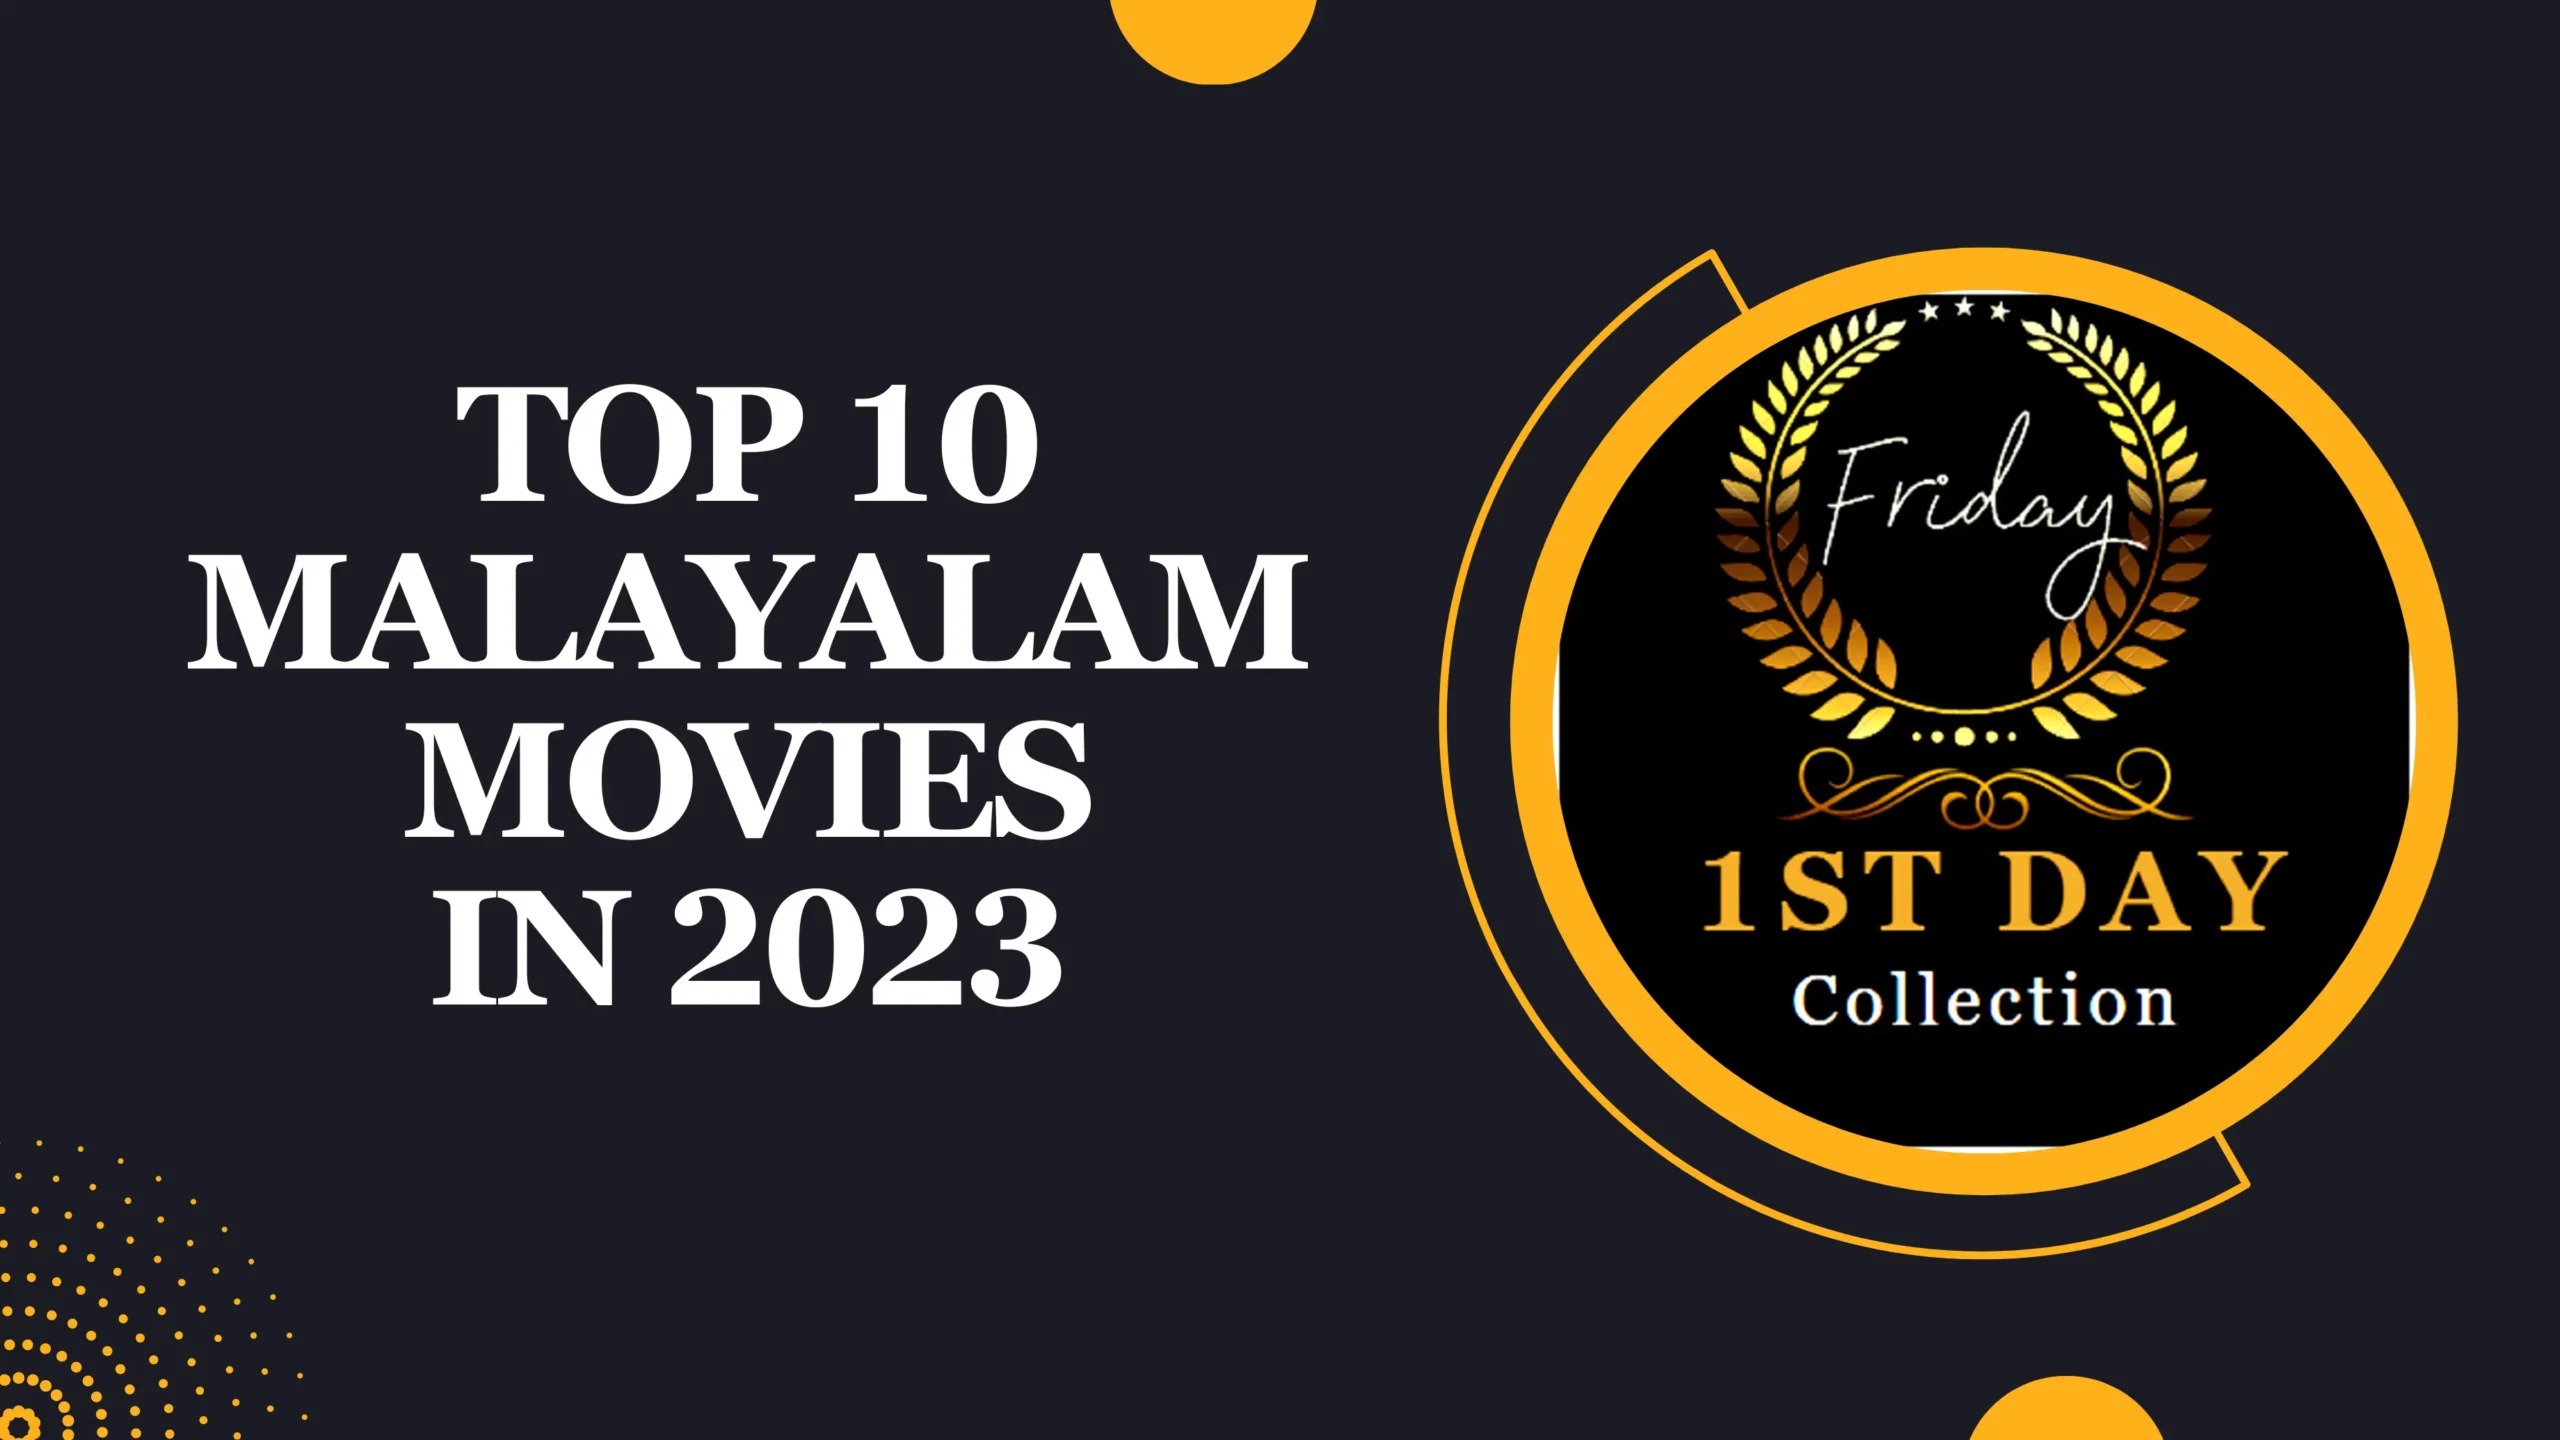 Top 10 malayalam movies in 2023